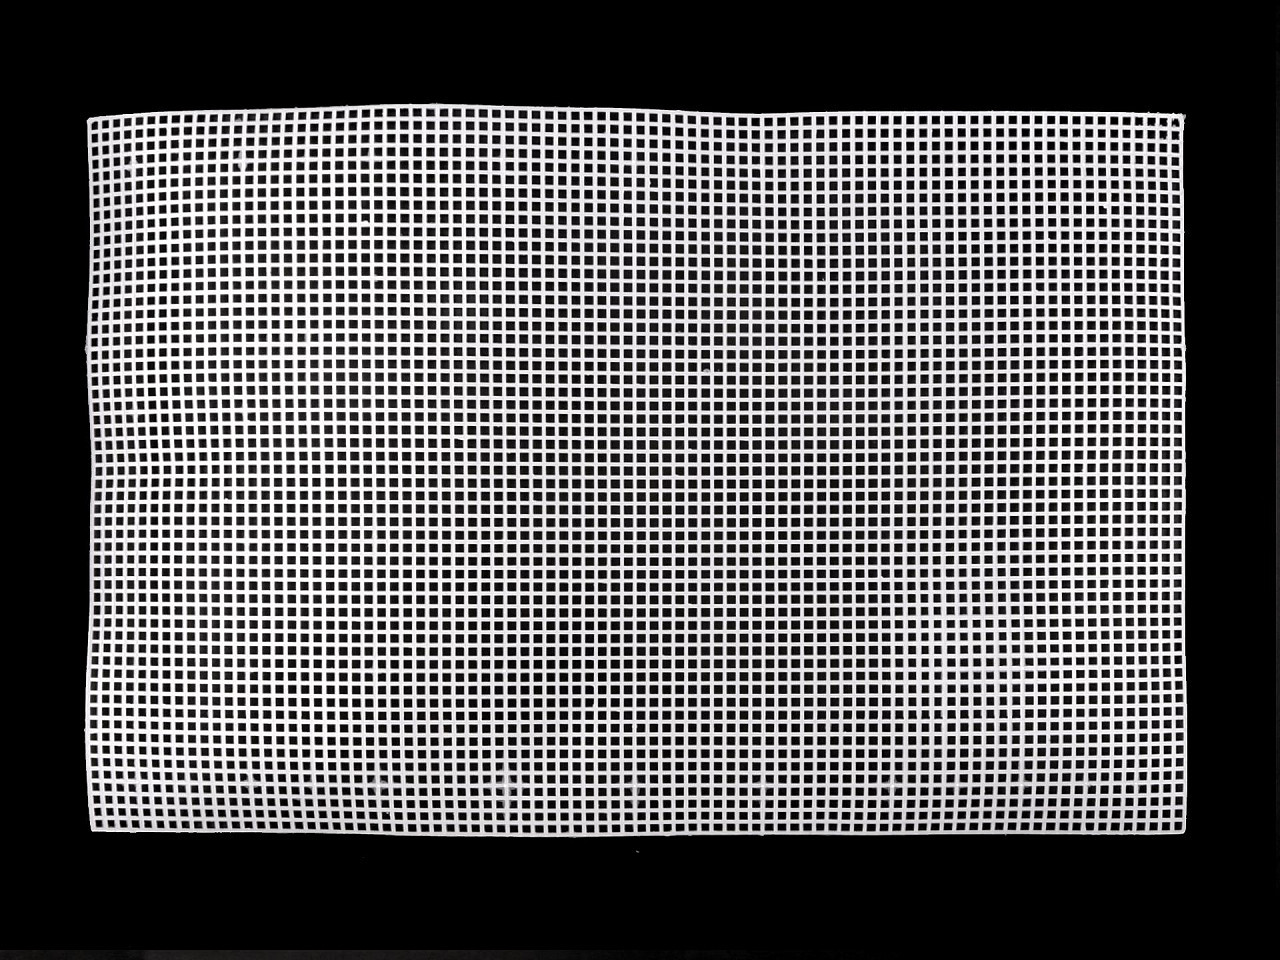 Plastová kanava / mřížka tapiko 32,8x50,5 cm, barva bílá